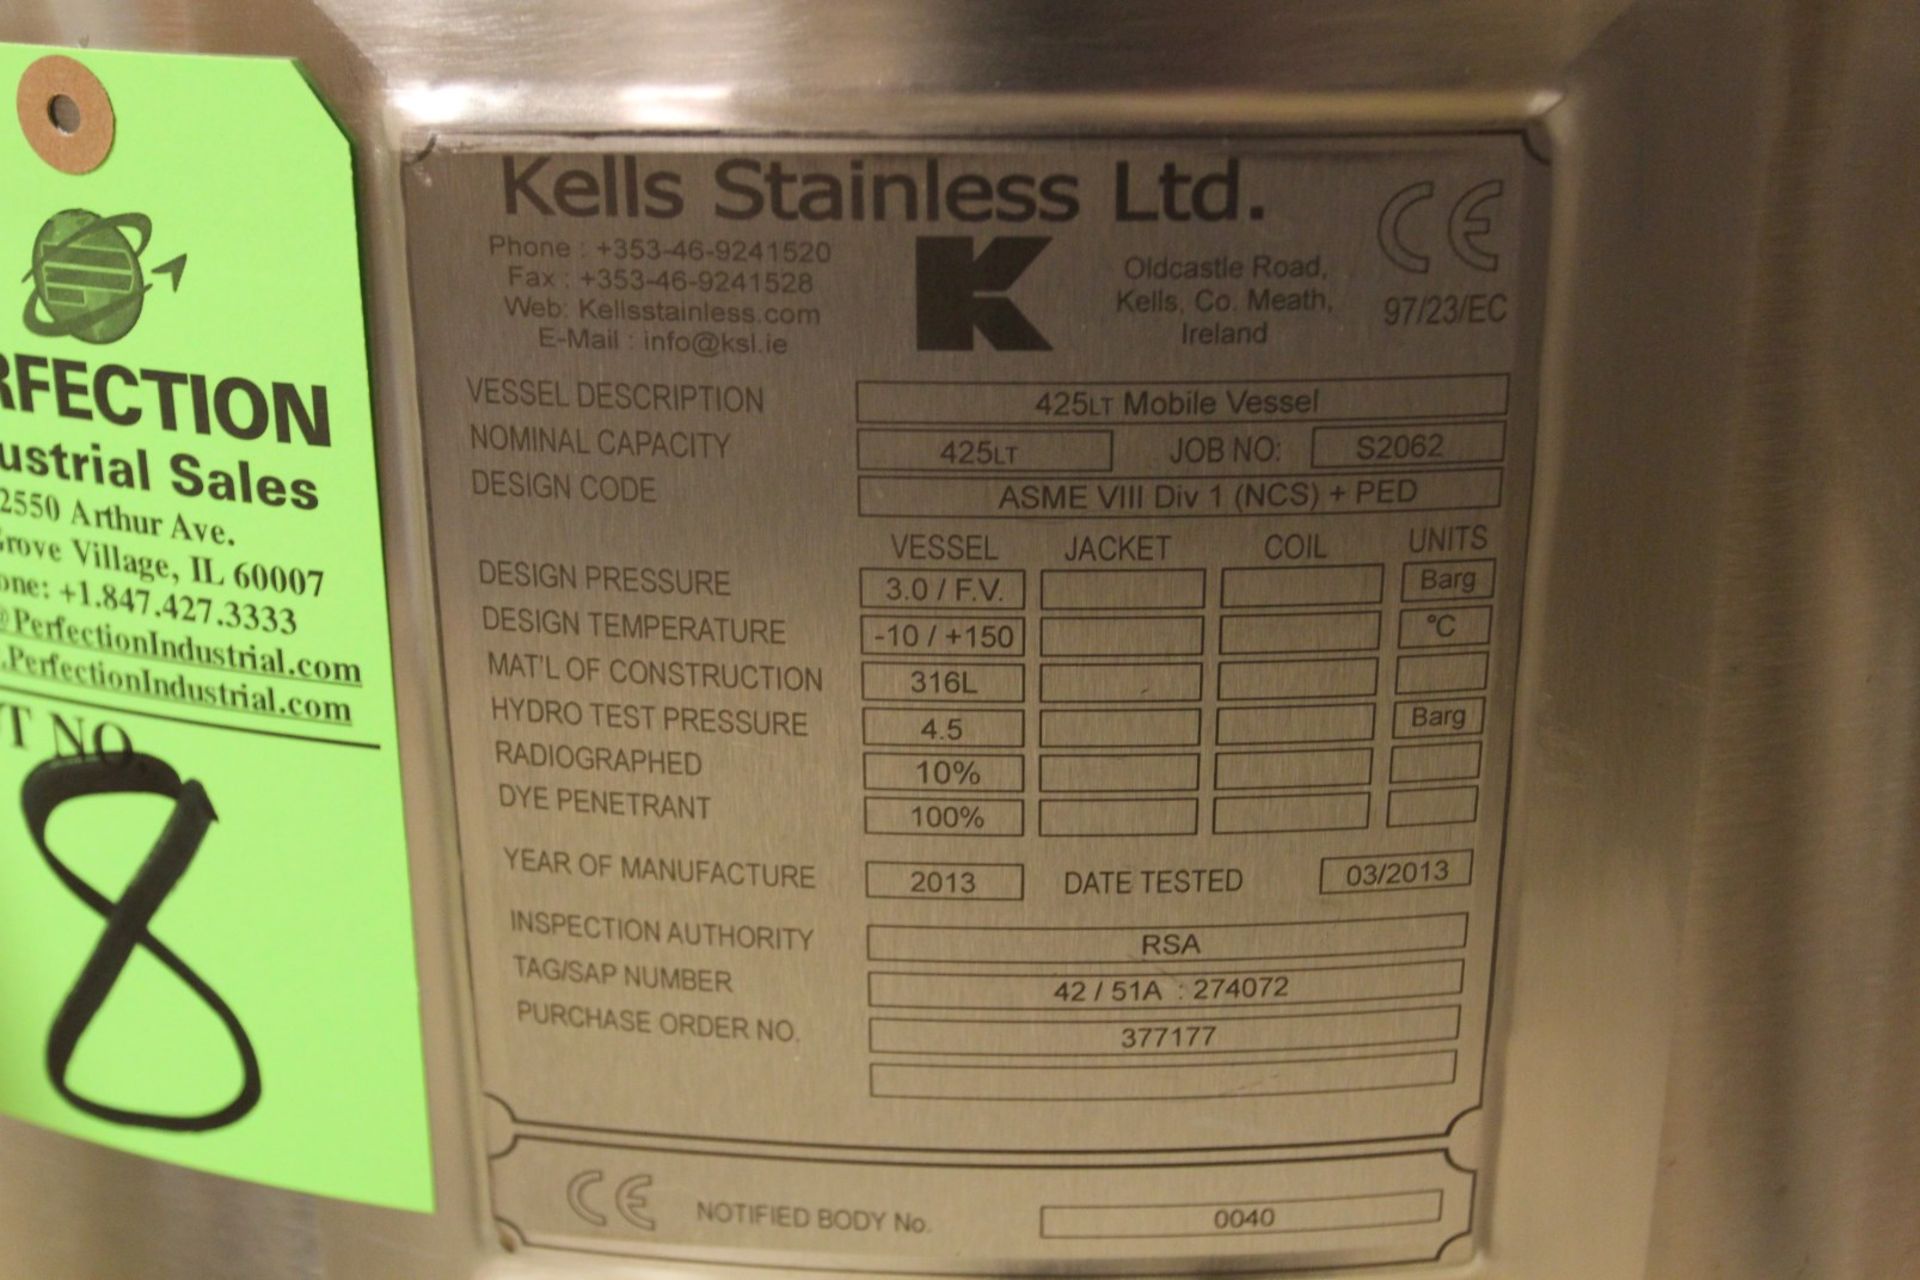 2013 Kells Stainless 425LT Mobile Vessel, Job No S2062, 425 Liter Capacity, 316L Stainless Steel - Image 4 of 4